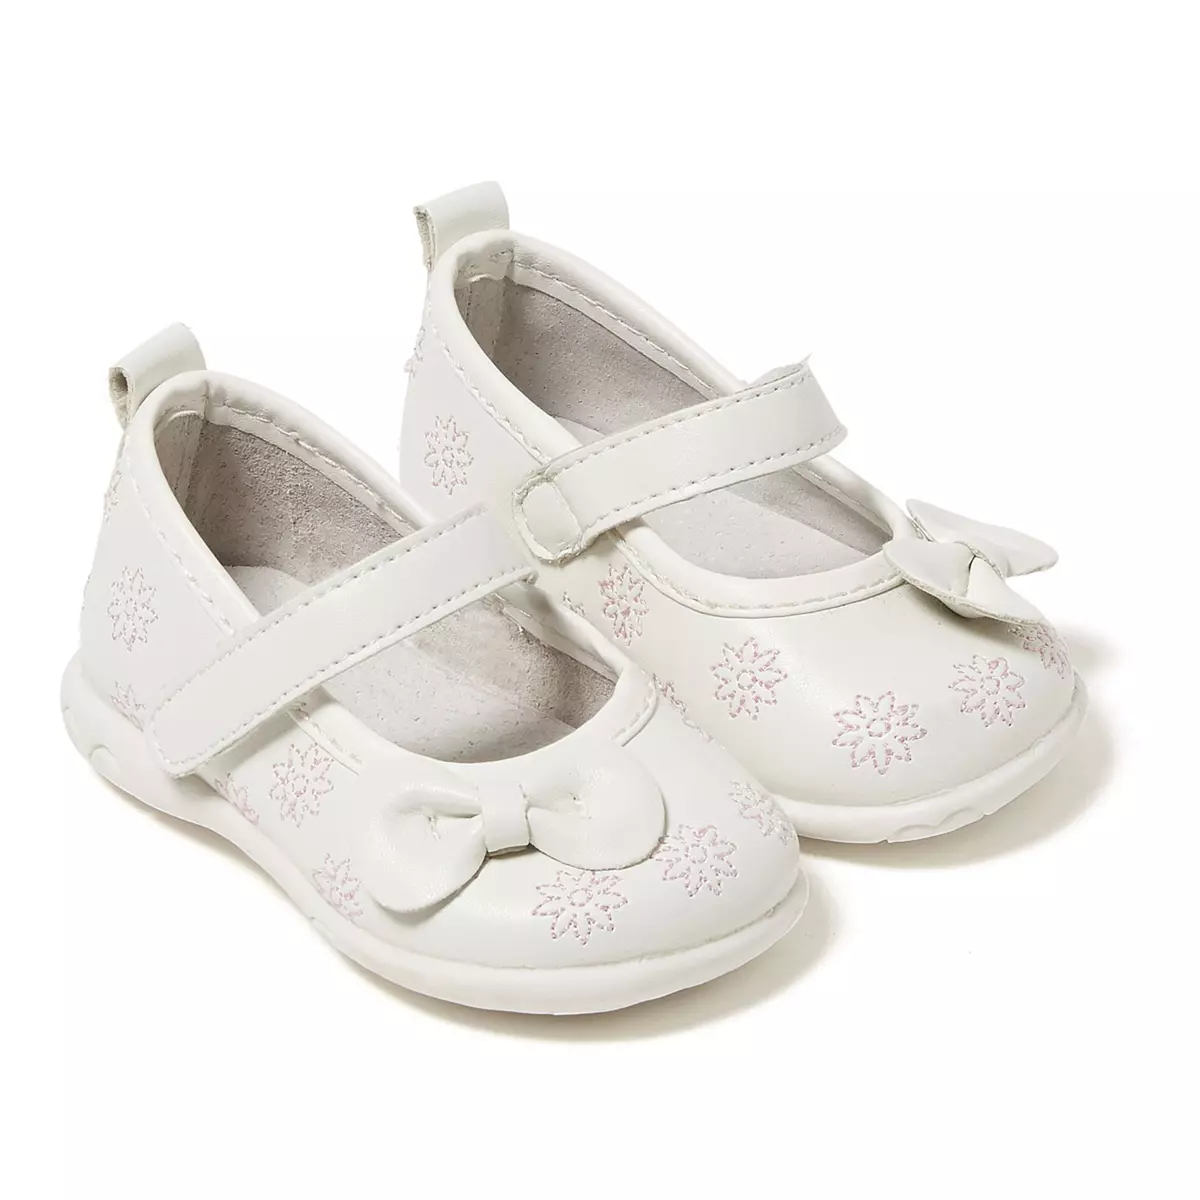 IN EXTENSO Chaussures babies bébé fille